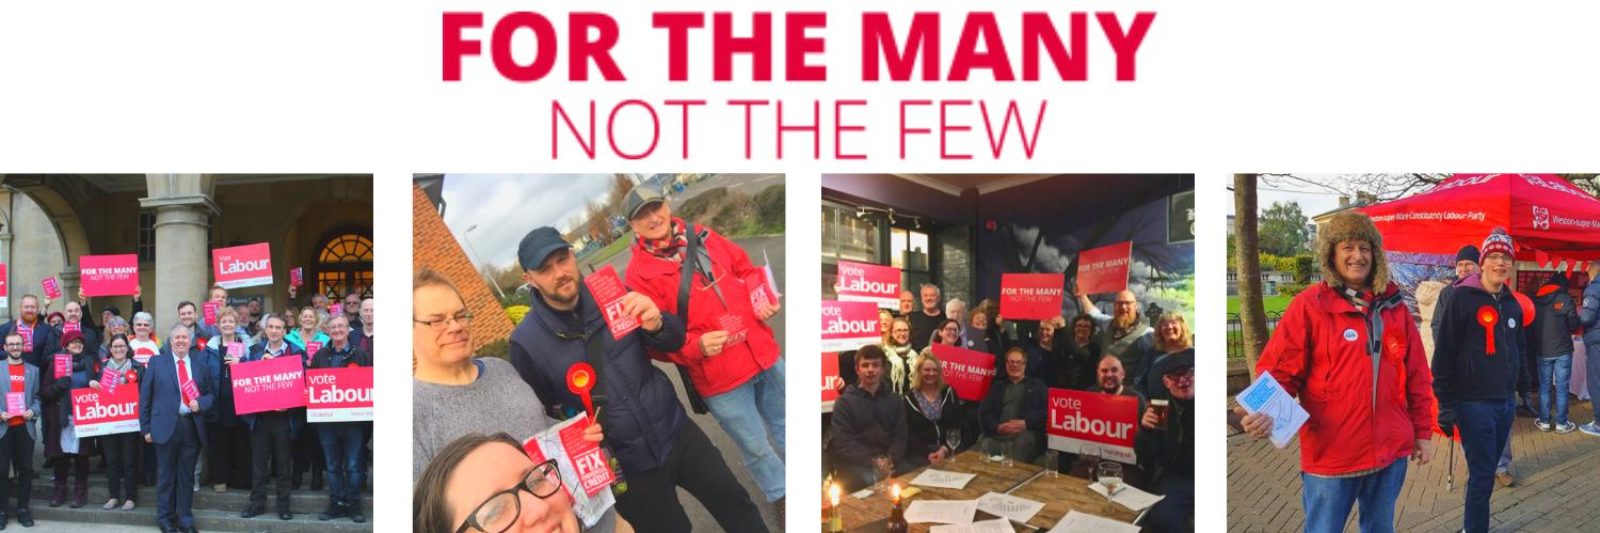 Weston Labour campaigners